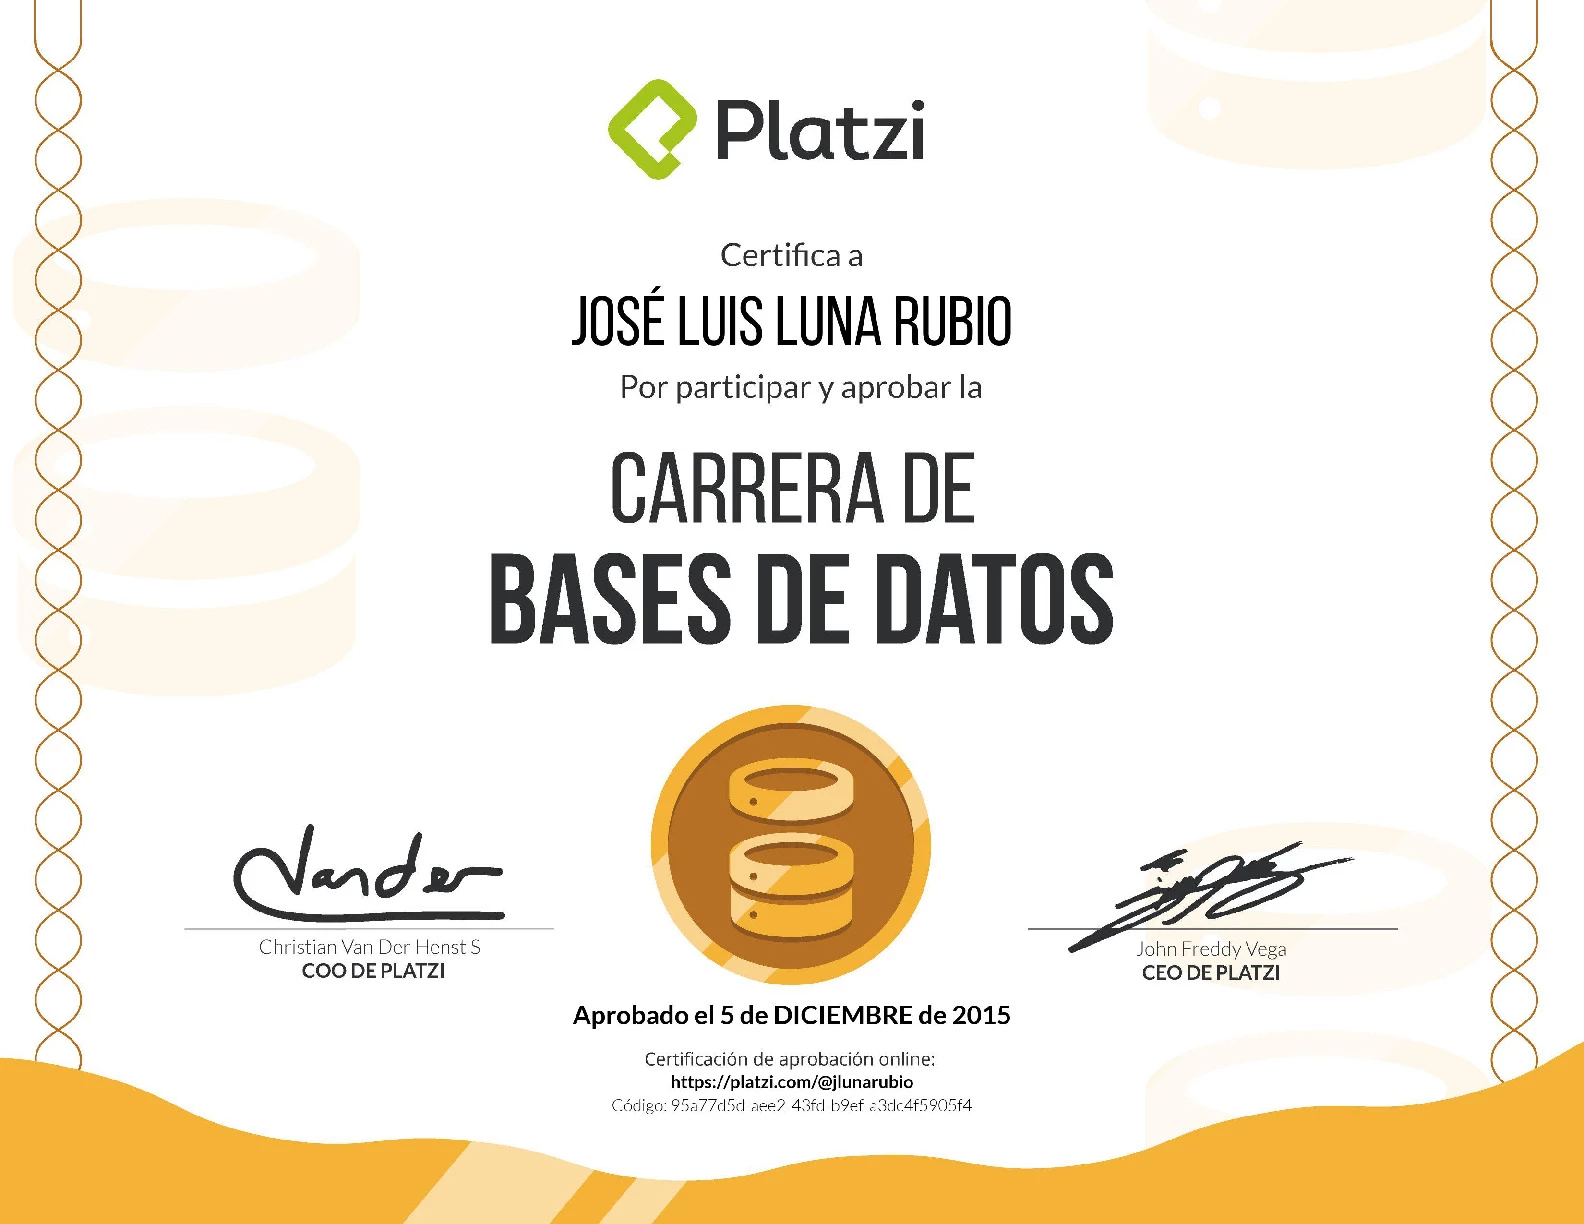 Carrera Platzi Jose Luis Luna Rubio - Base de Datos